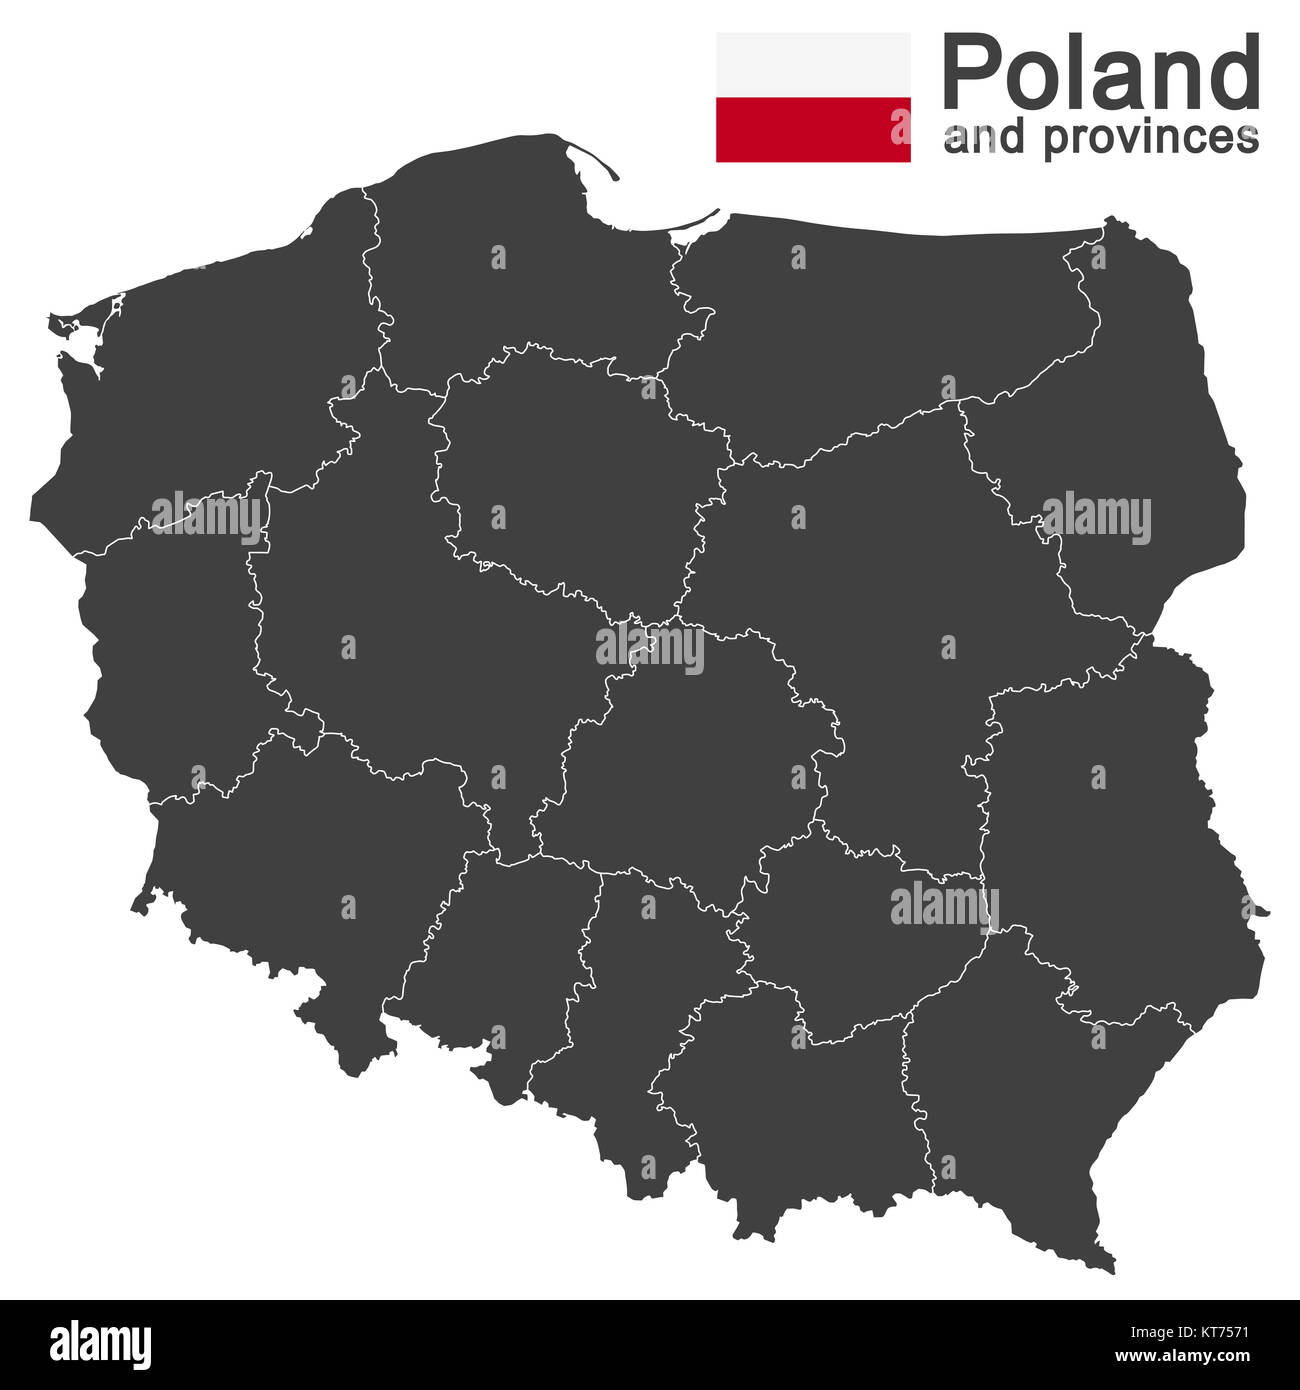 country poland and voivodeships Stock Photo